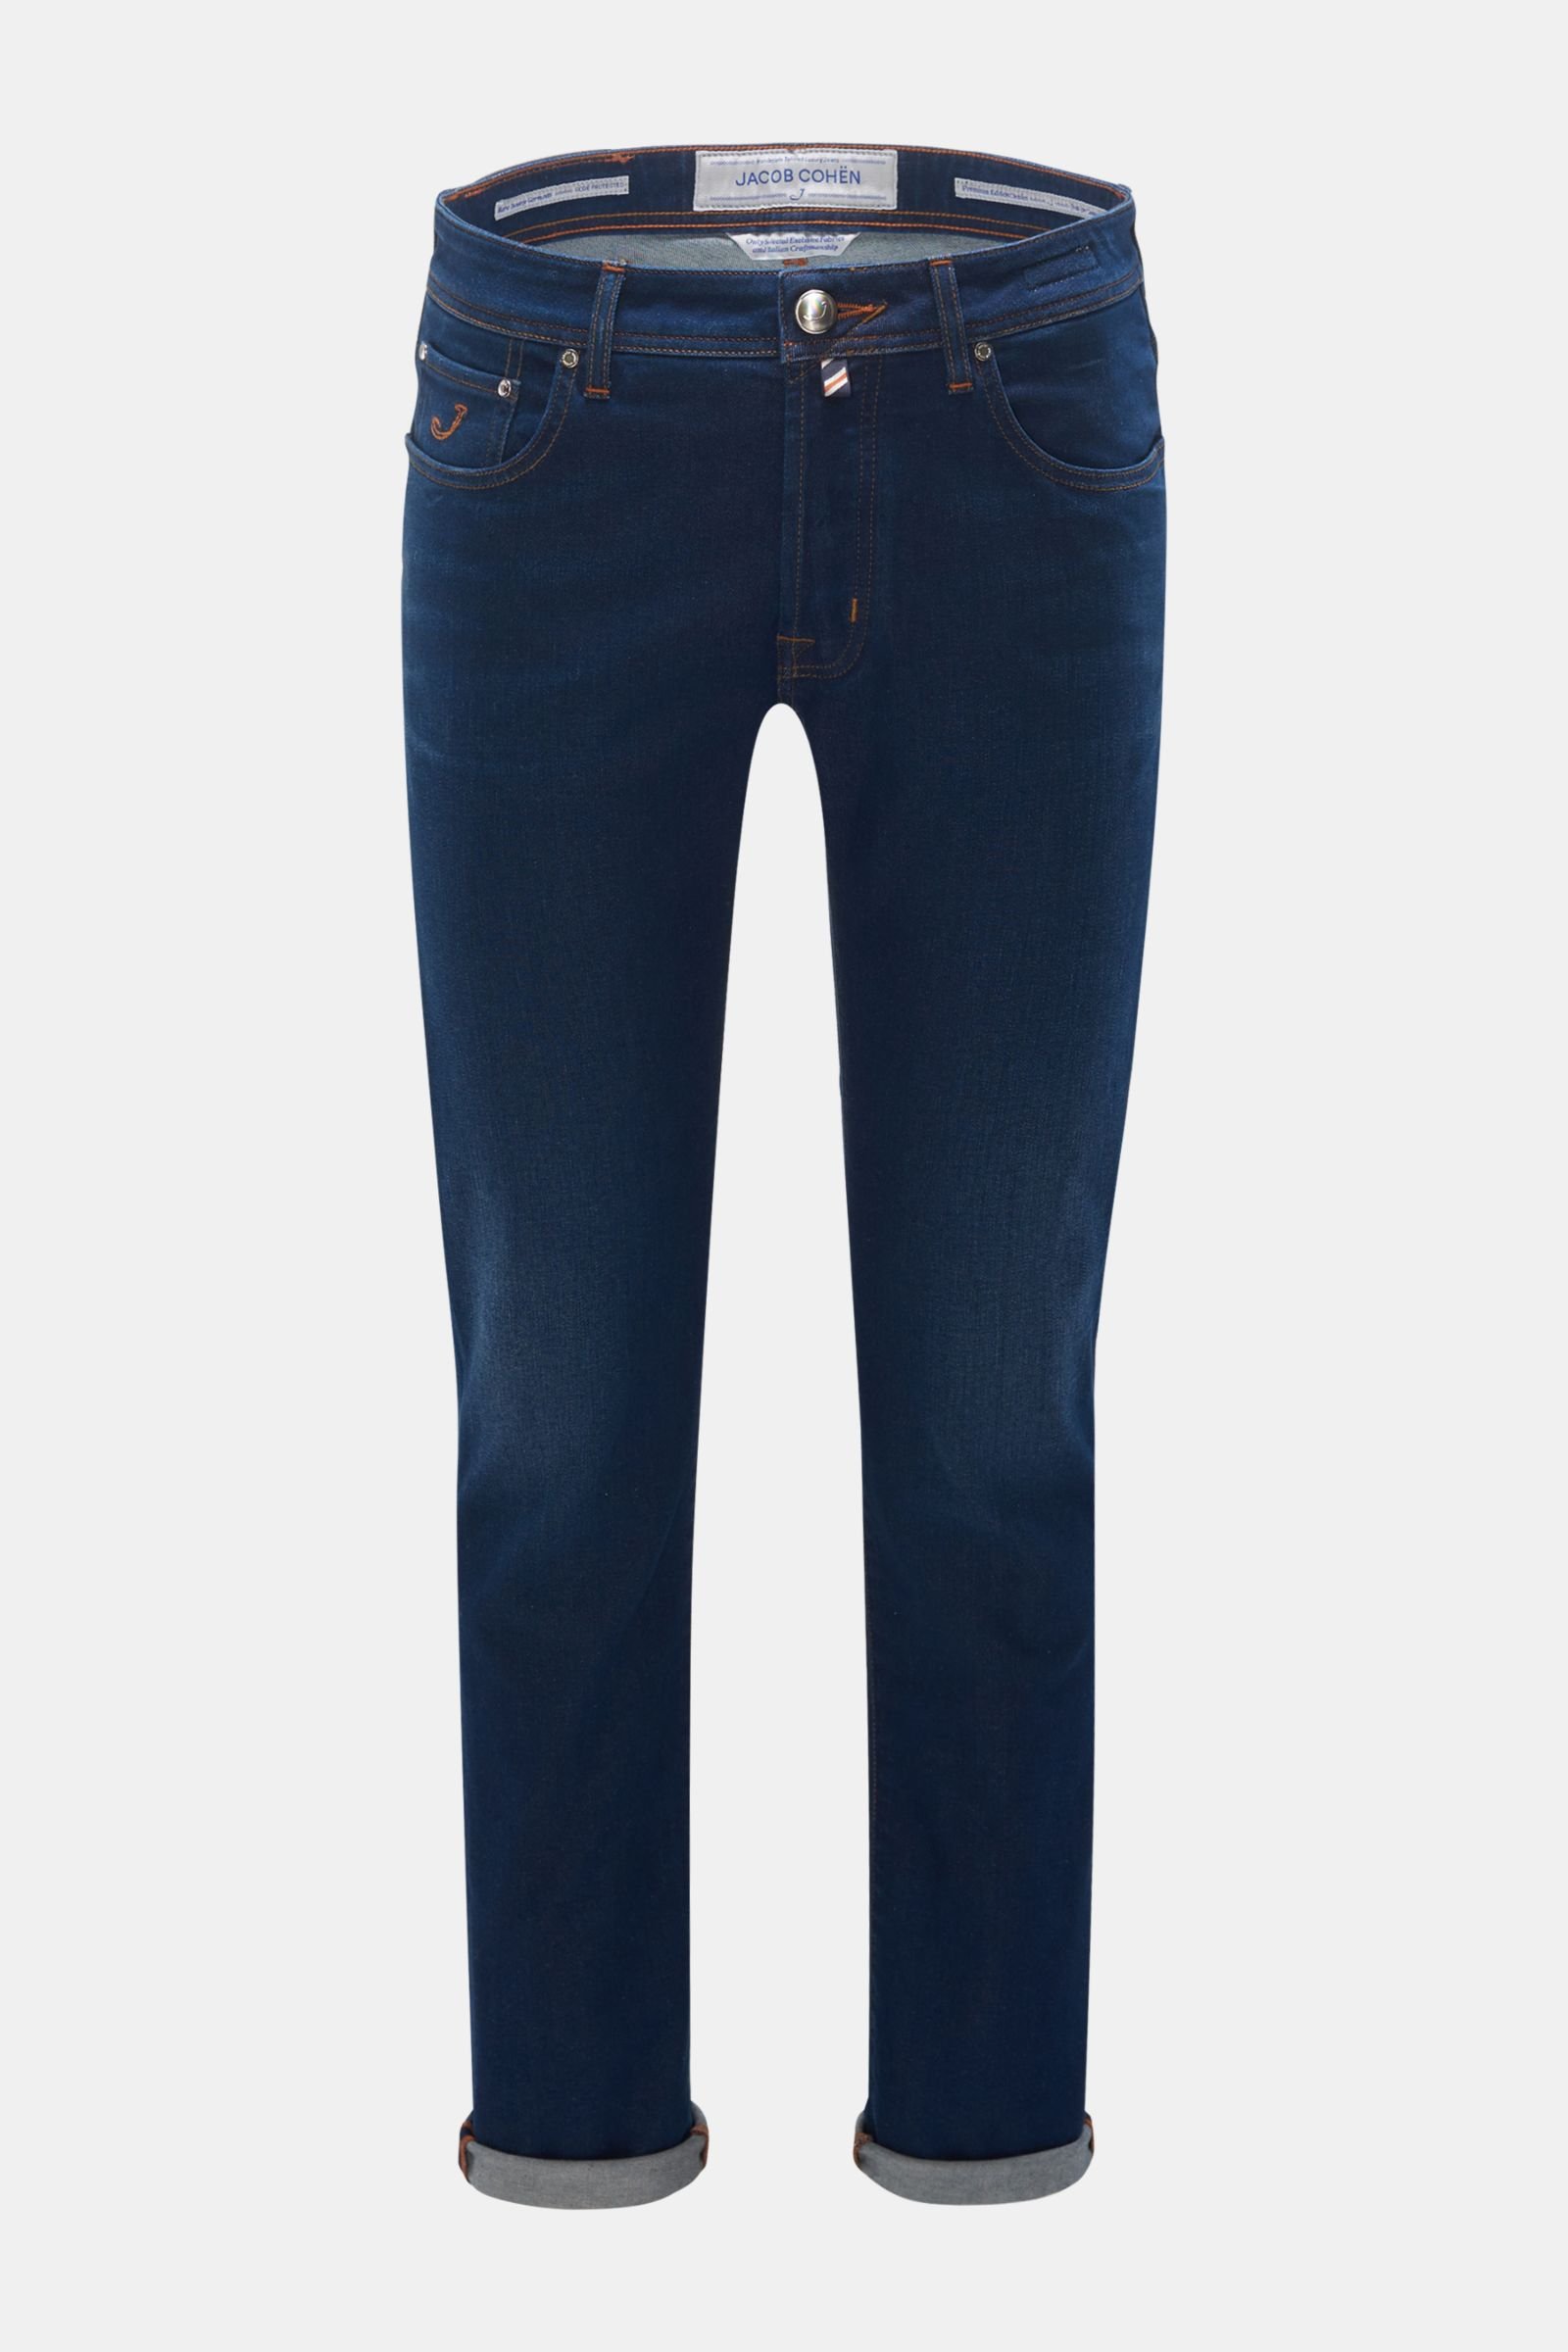 Jeans 'J688 Comfort Slim Fit' navy 